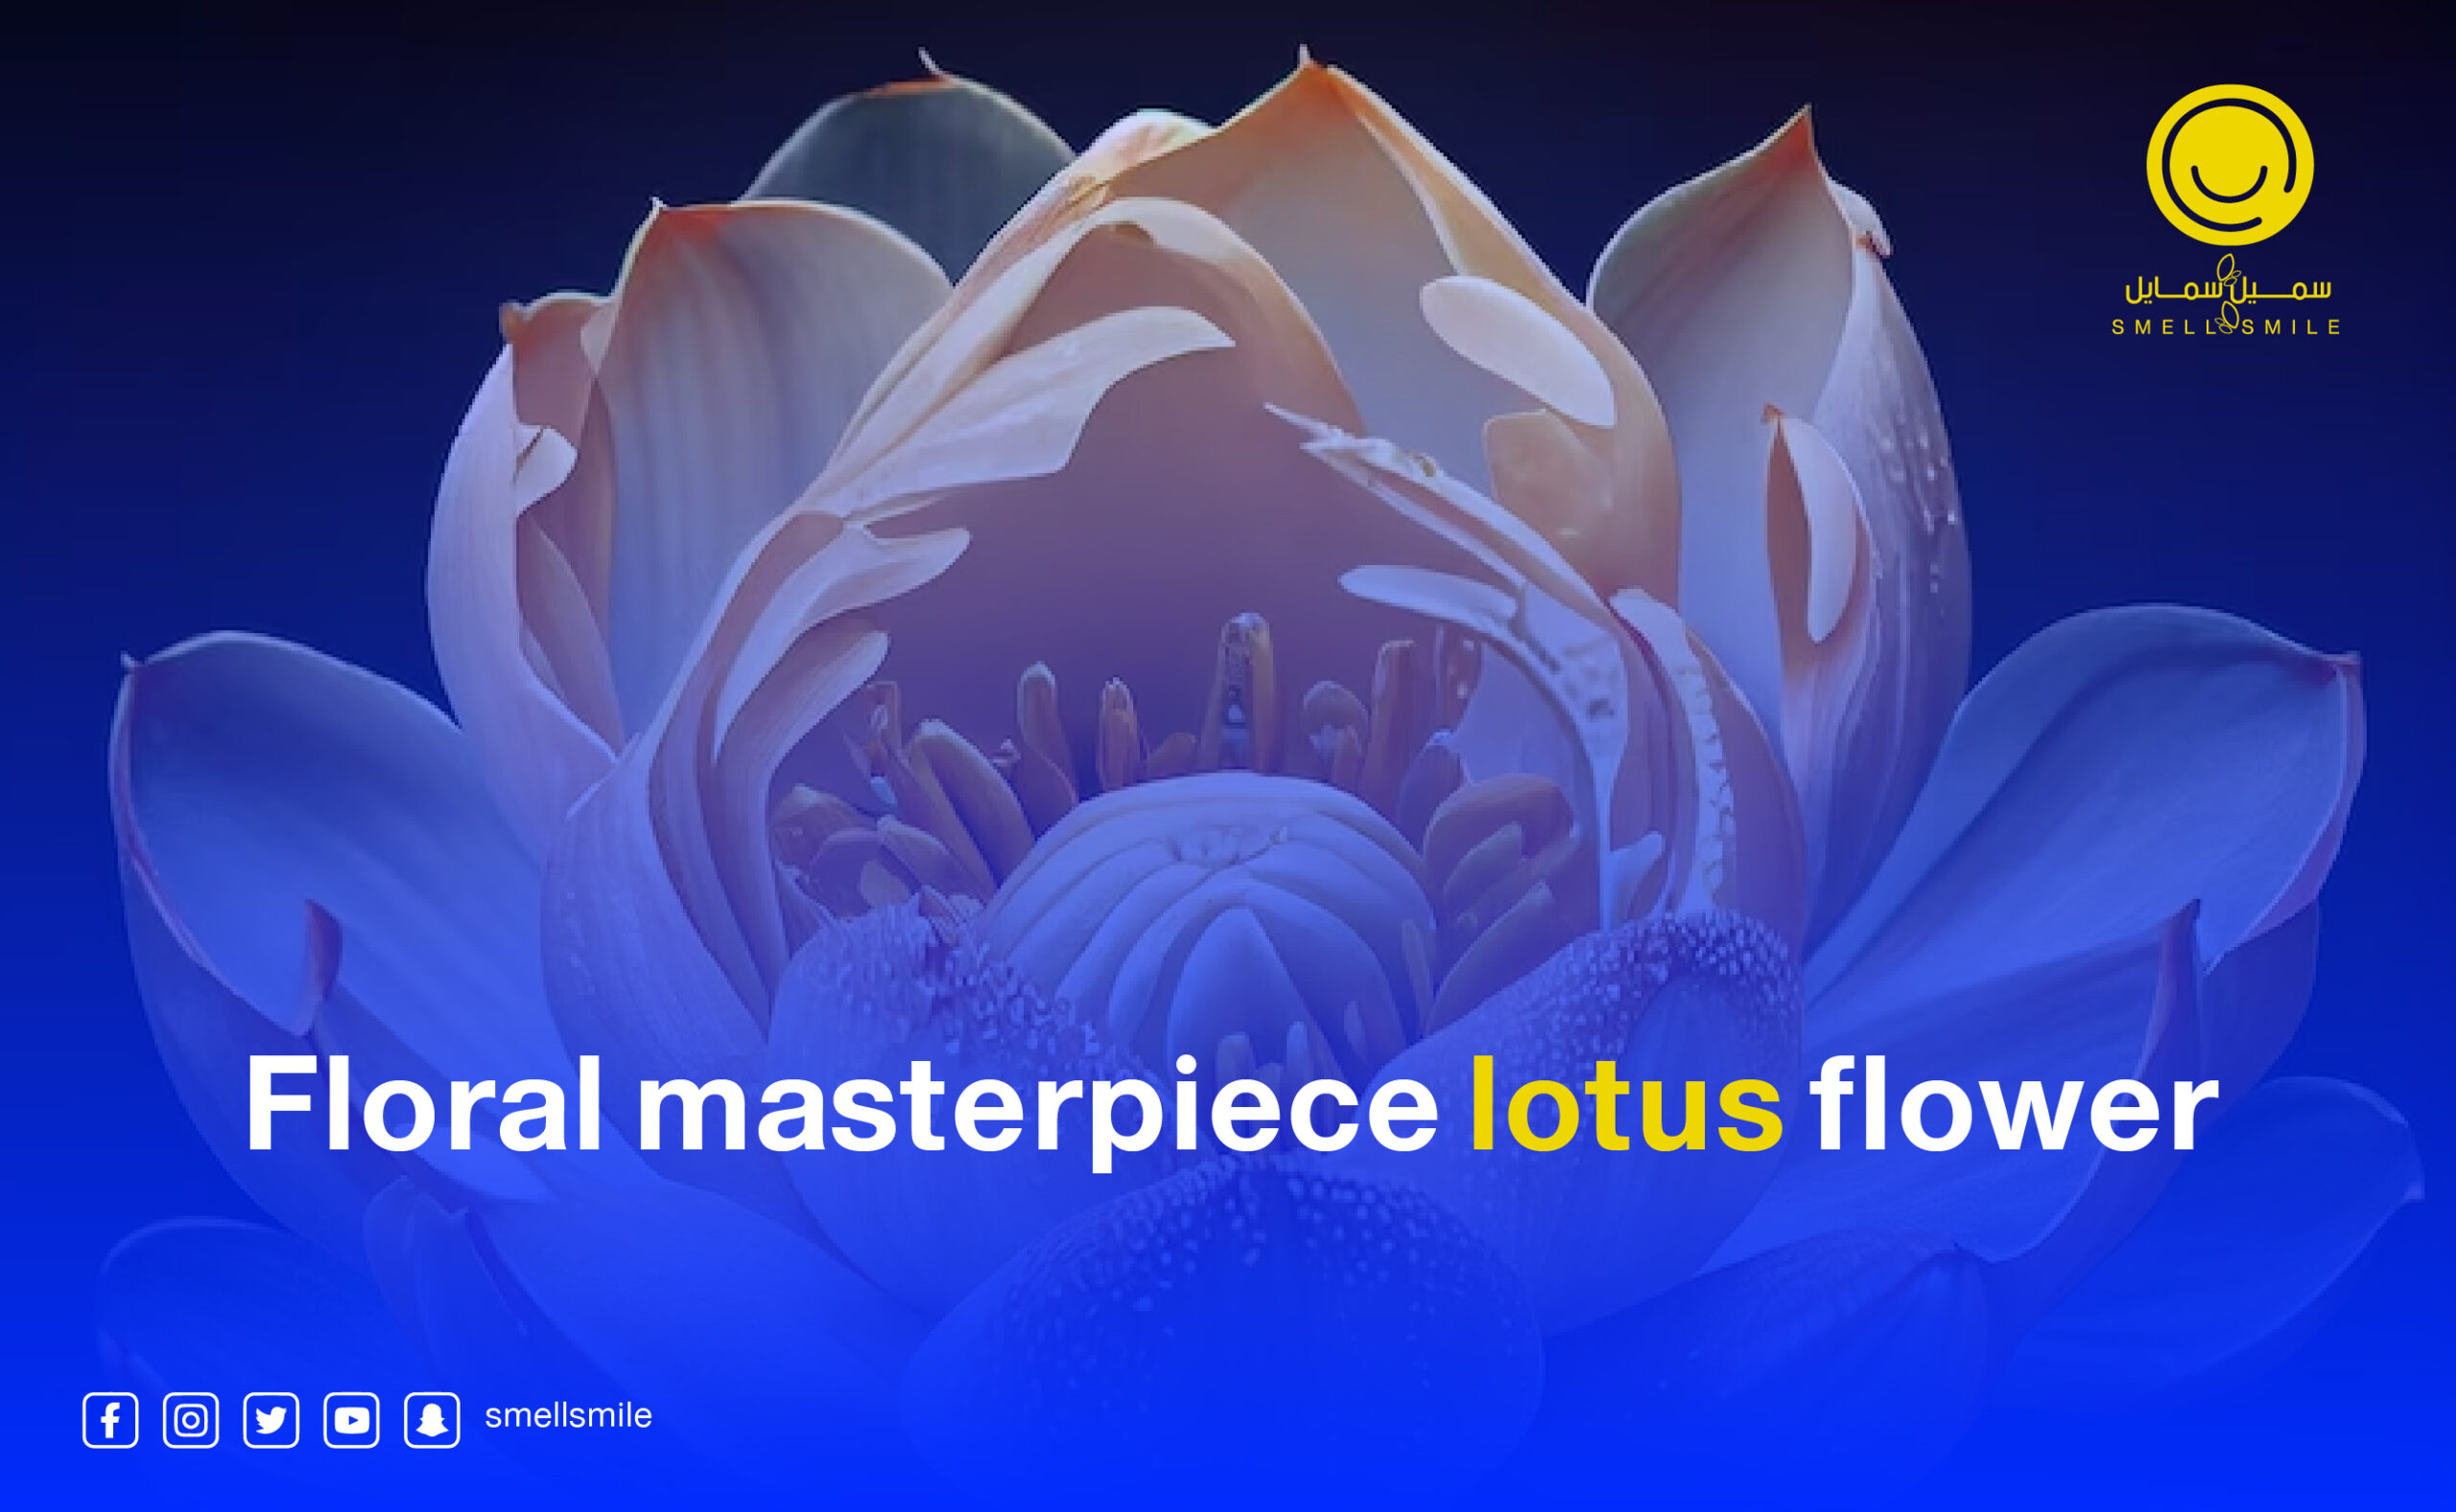 Lotus flower masterpiece of flowers